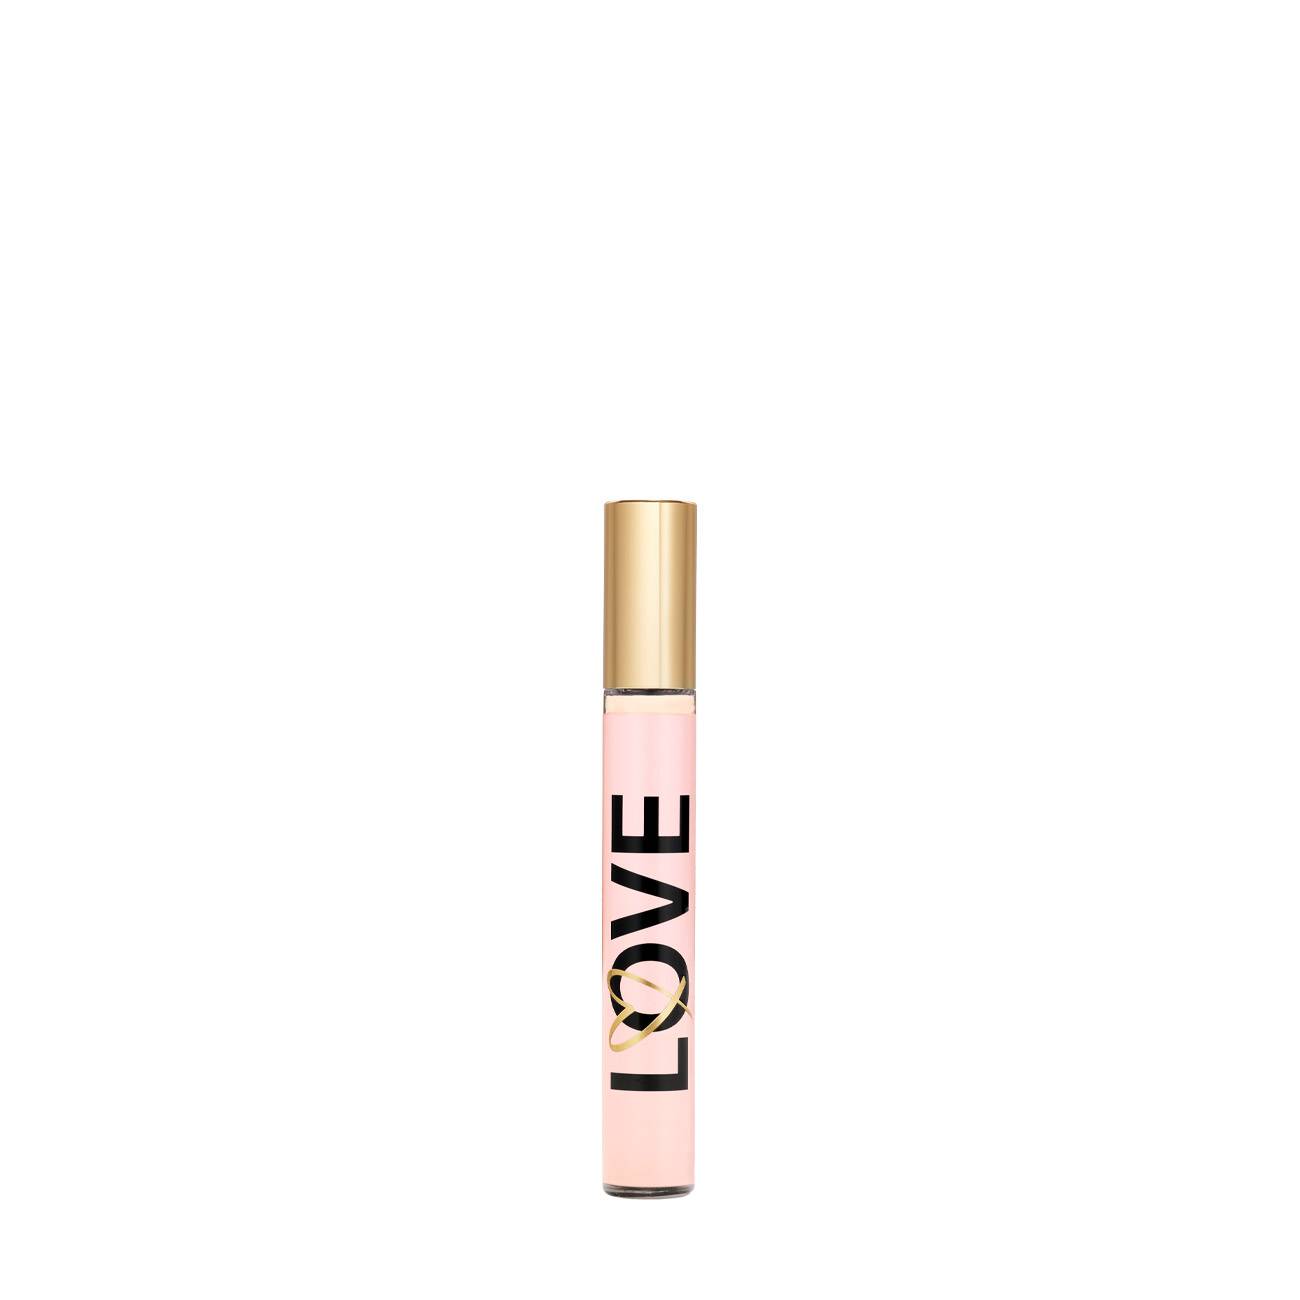 Apa de Parfum Victoria’s Secret LOVE ROLLERBALL 7ml cu comanda online